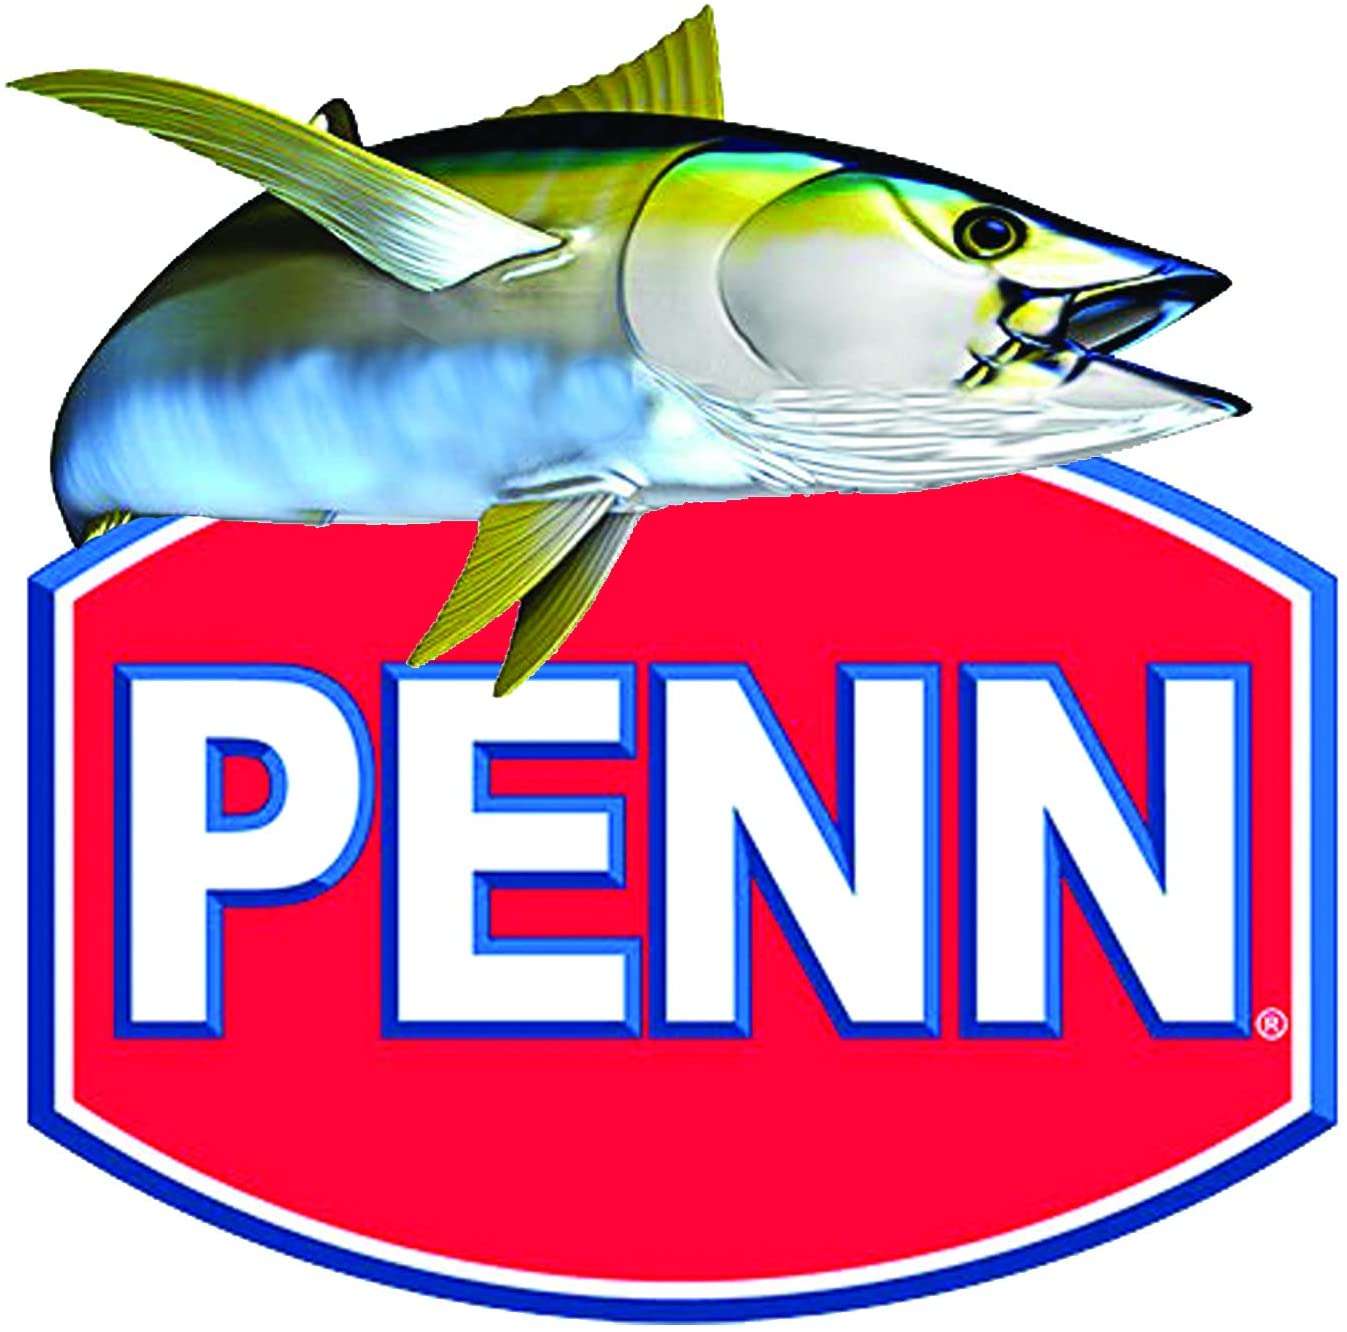 PENN FISHING REELS Tackle Outdoor Sports Vinyl Window Decal